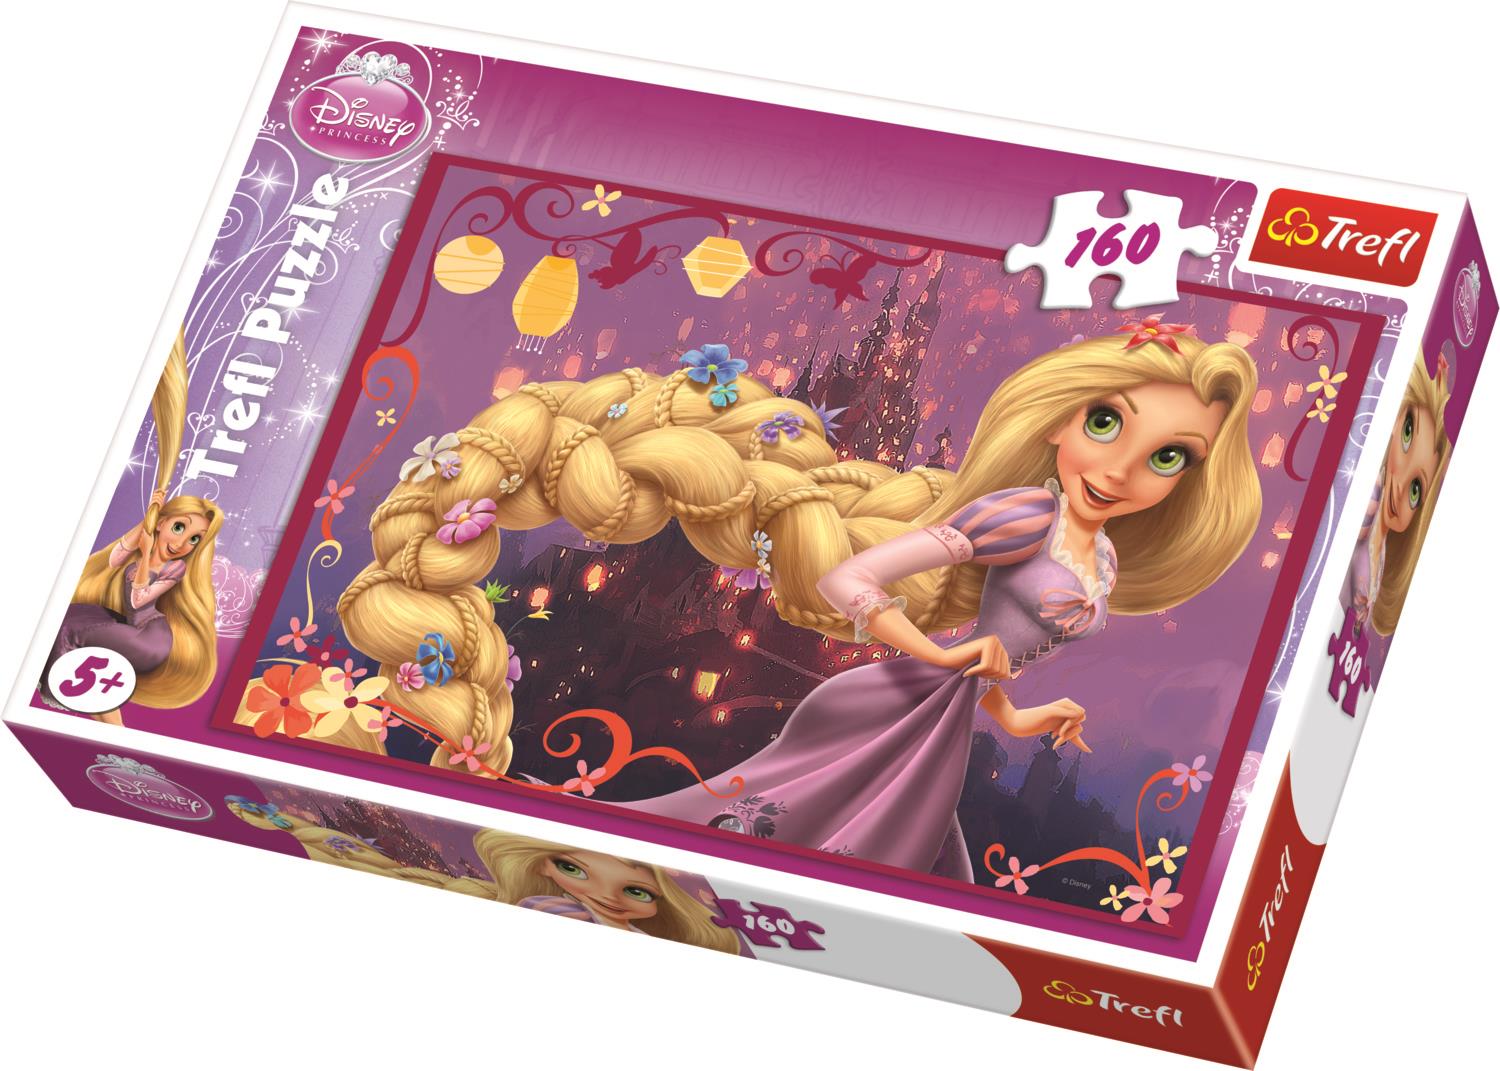 Trefl Çocuk Puzzle 15194 Rapunzel's Braid, Disney 160 Parça Puzzle